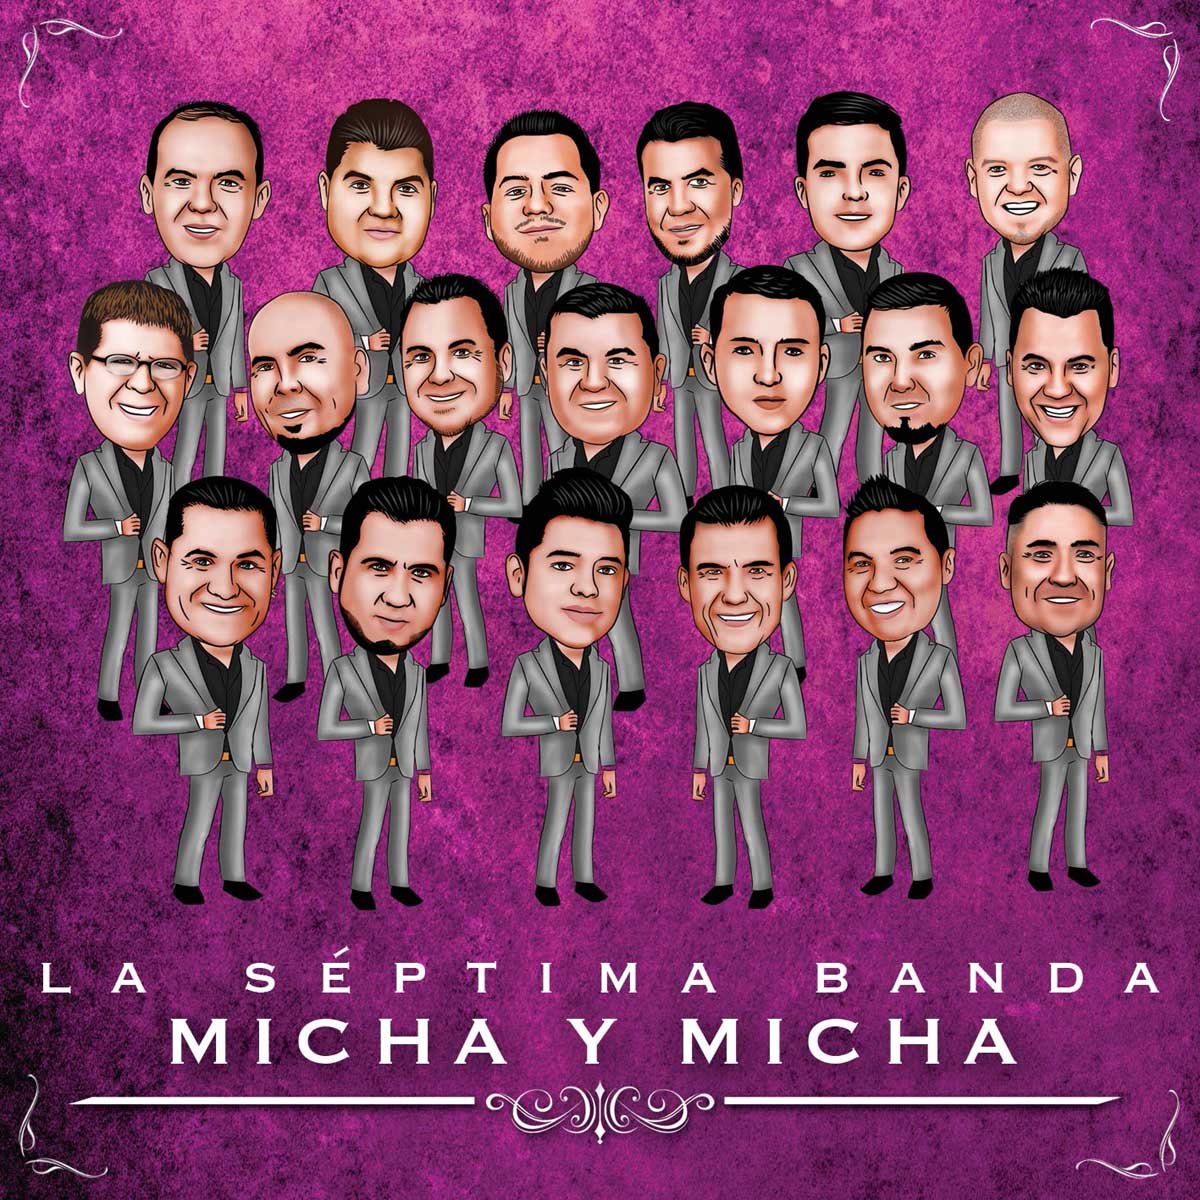 Cd la Septima Banda Micha y Micha